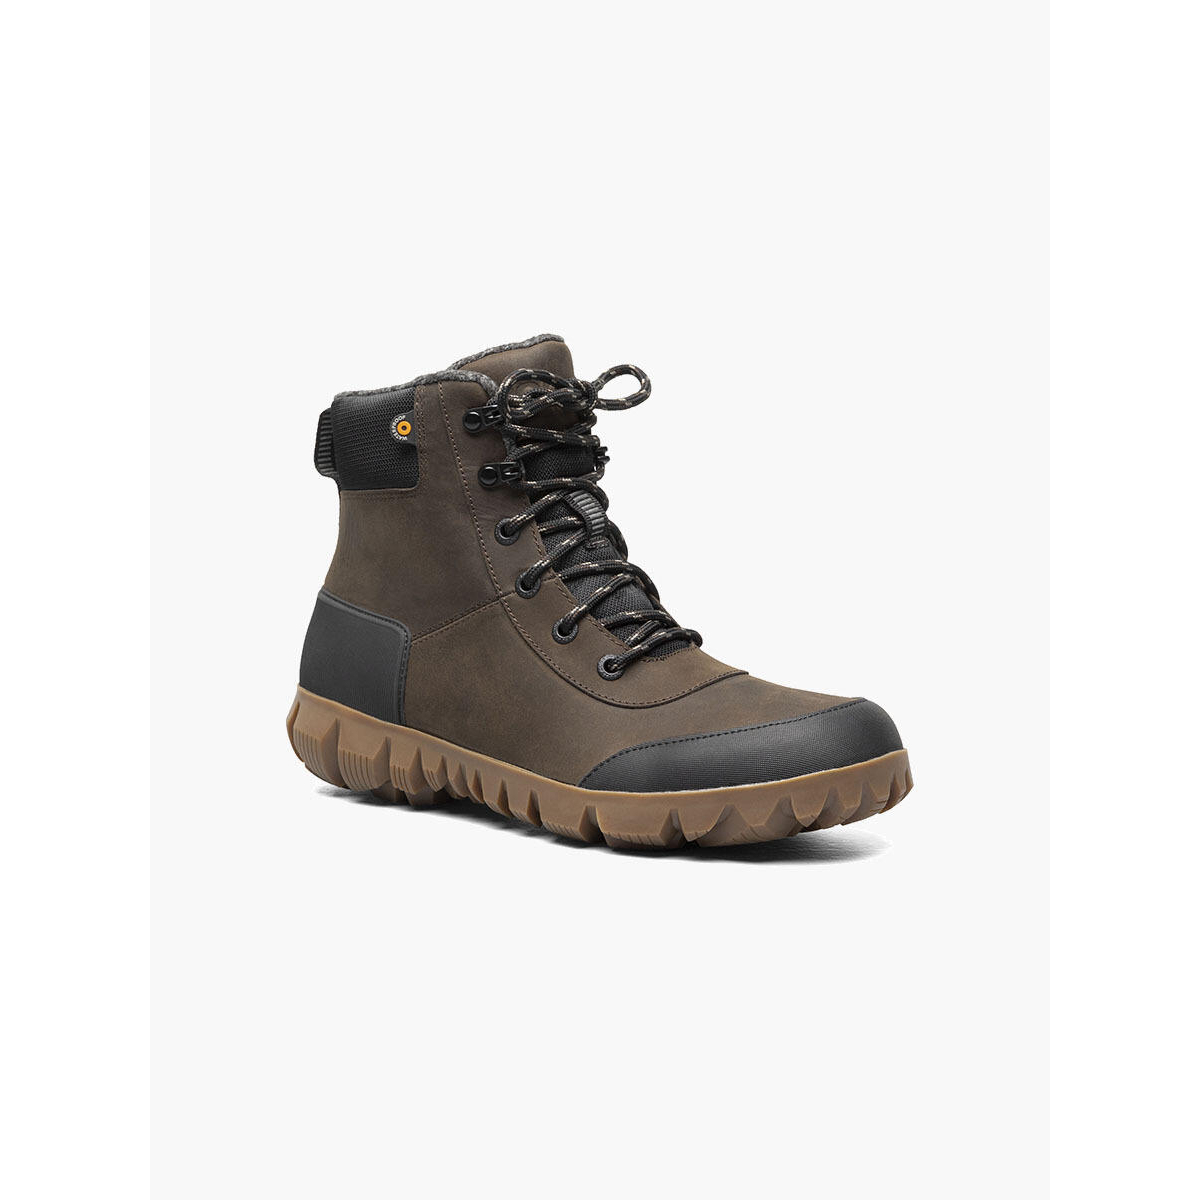 BOGS Men's Arcata Urban Leather Mid Winter Boots Chocolate - 72909-202 CHOCOLATE - CHOCOLATE, 12-M